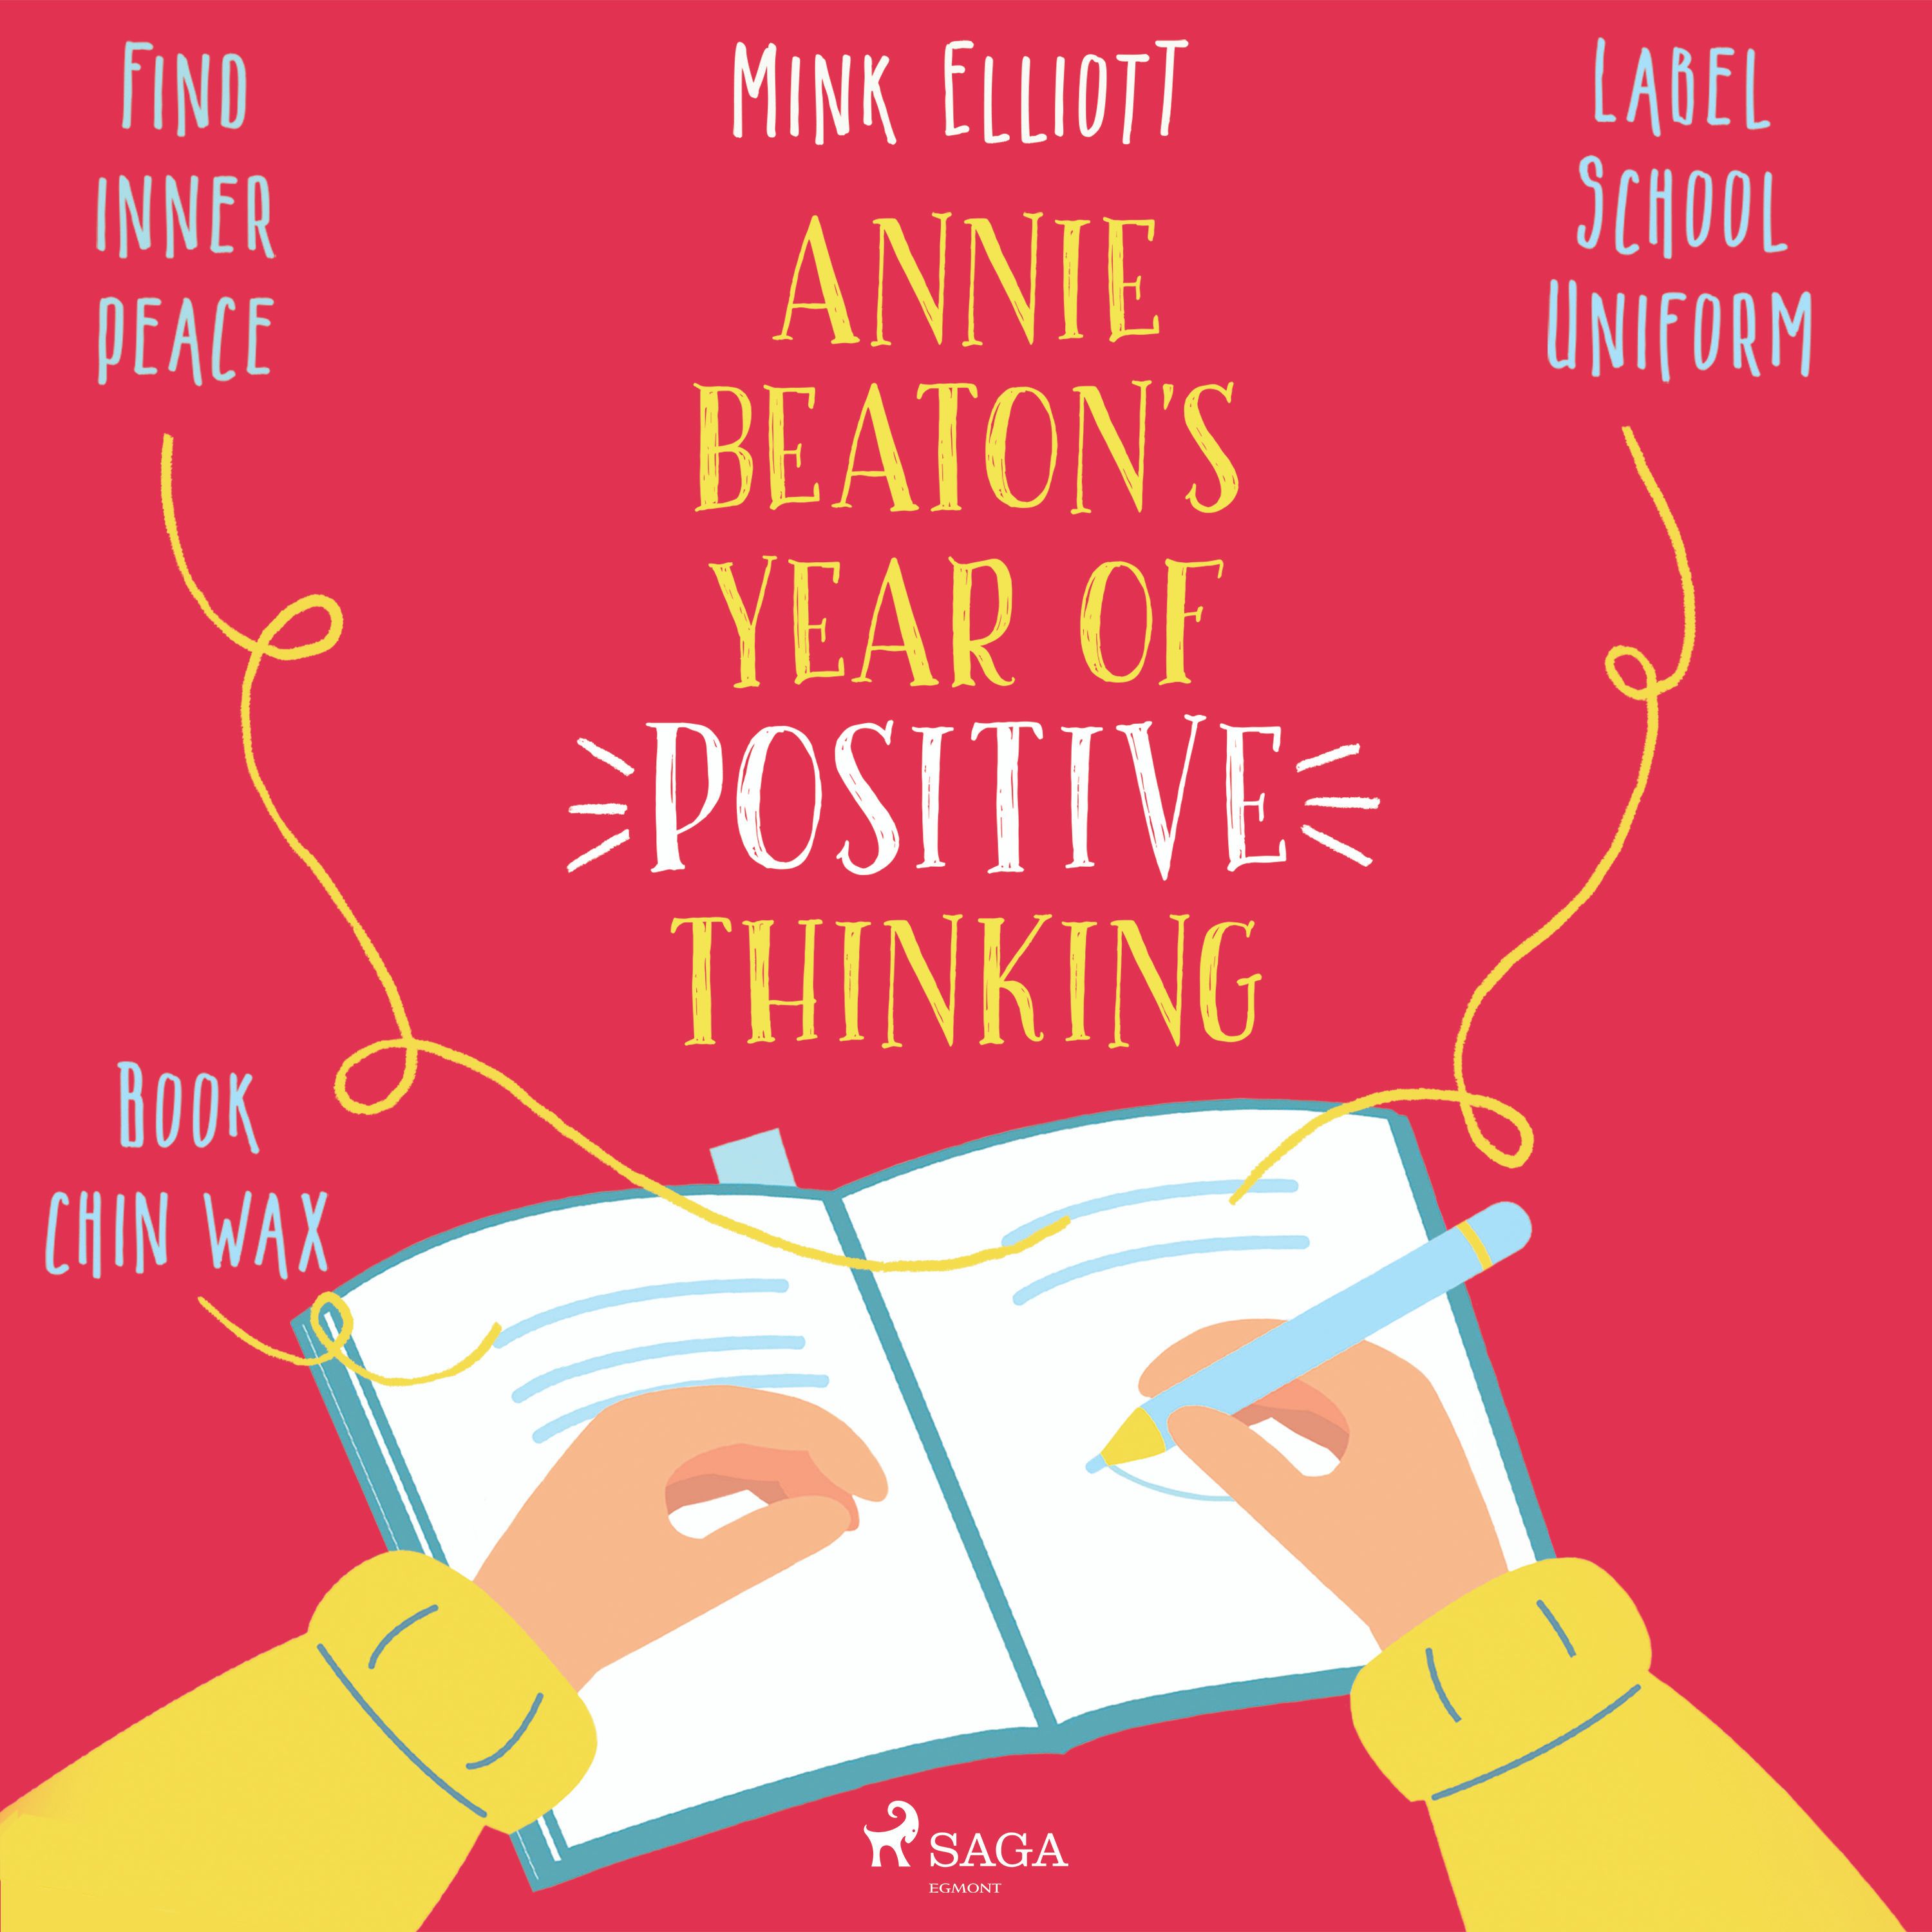 Annie Beaton's Year of Positive Thinking, ljudbok av Mink Elliott